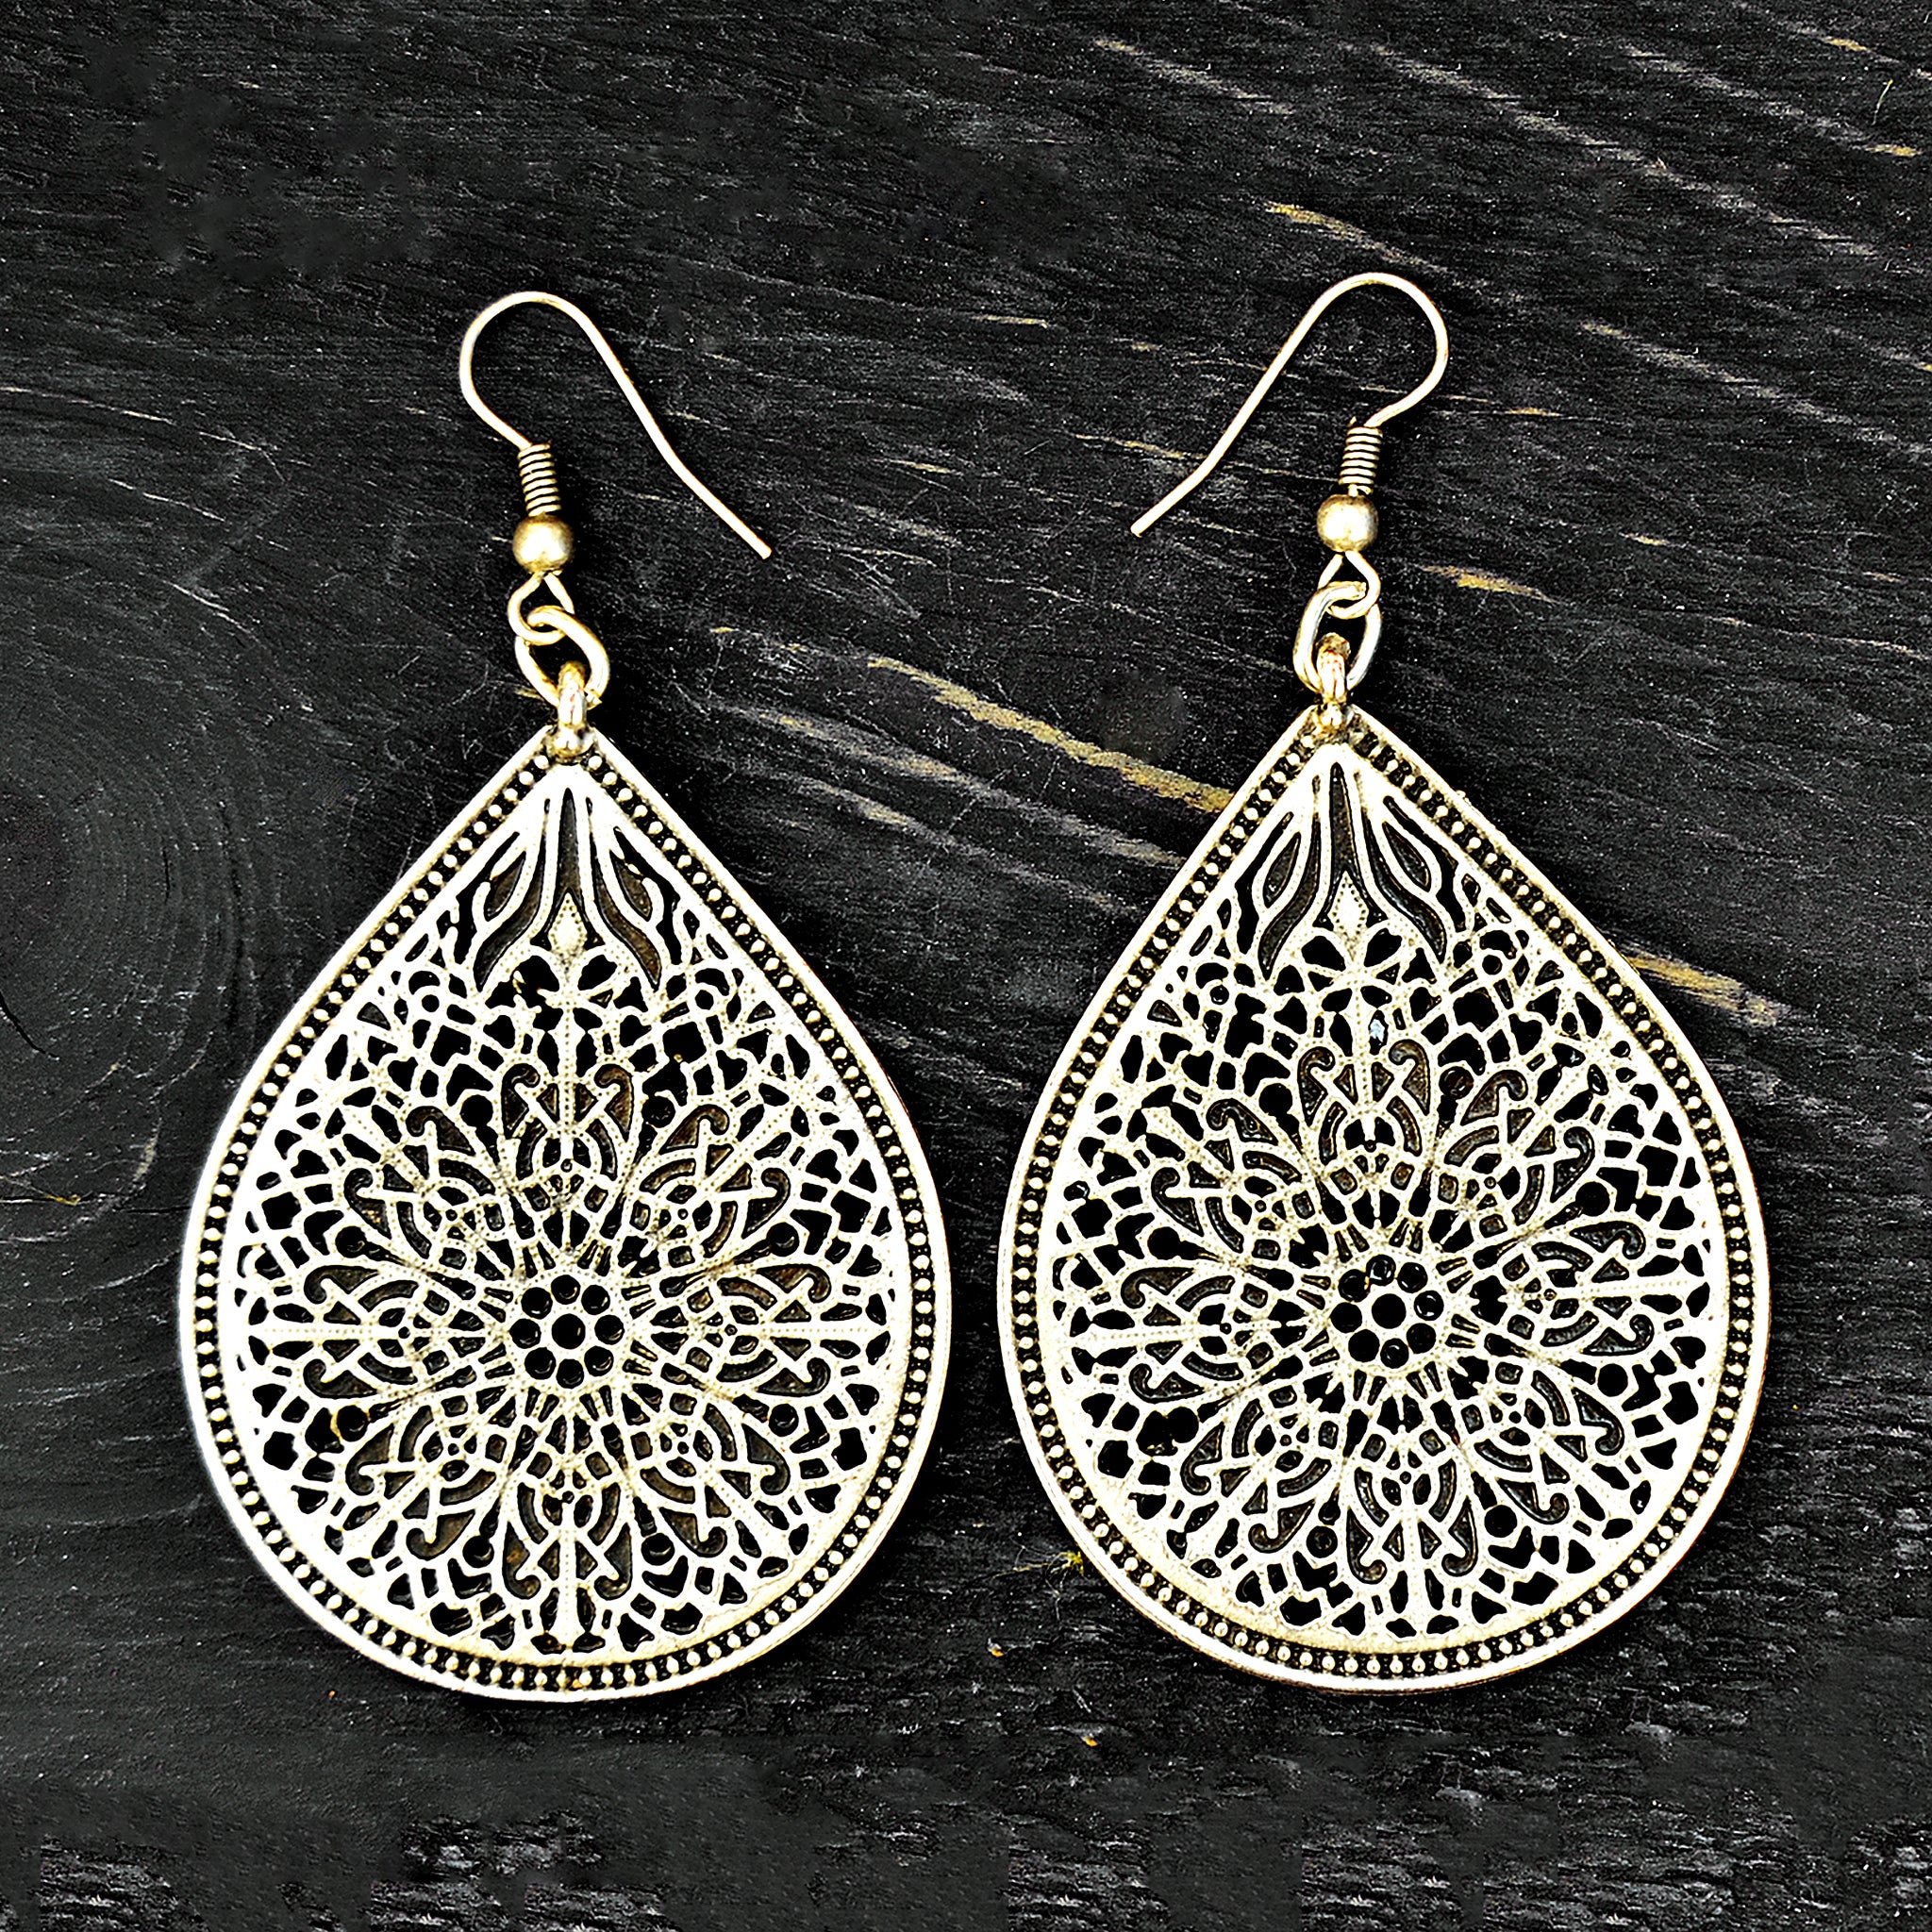 Ottoman filigree earrings